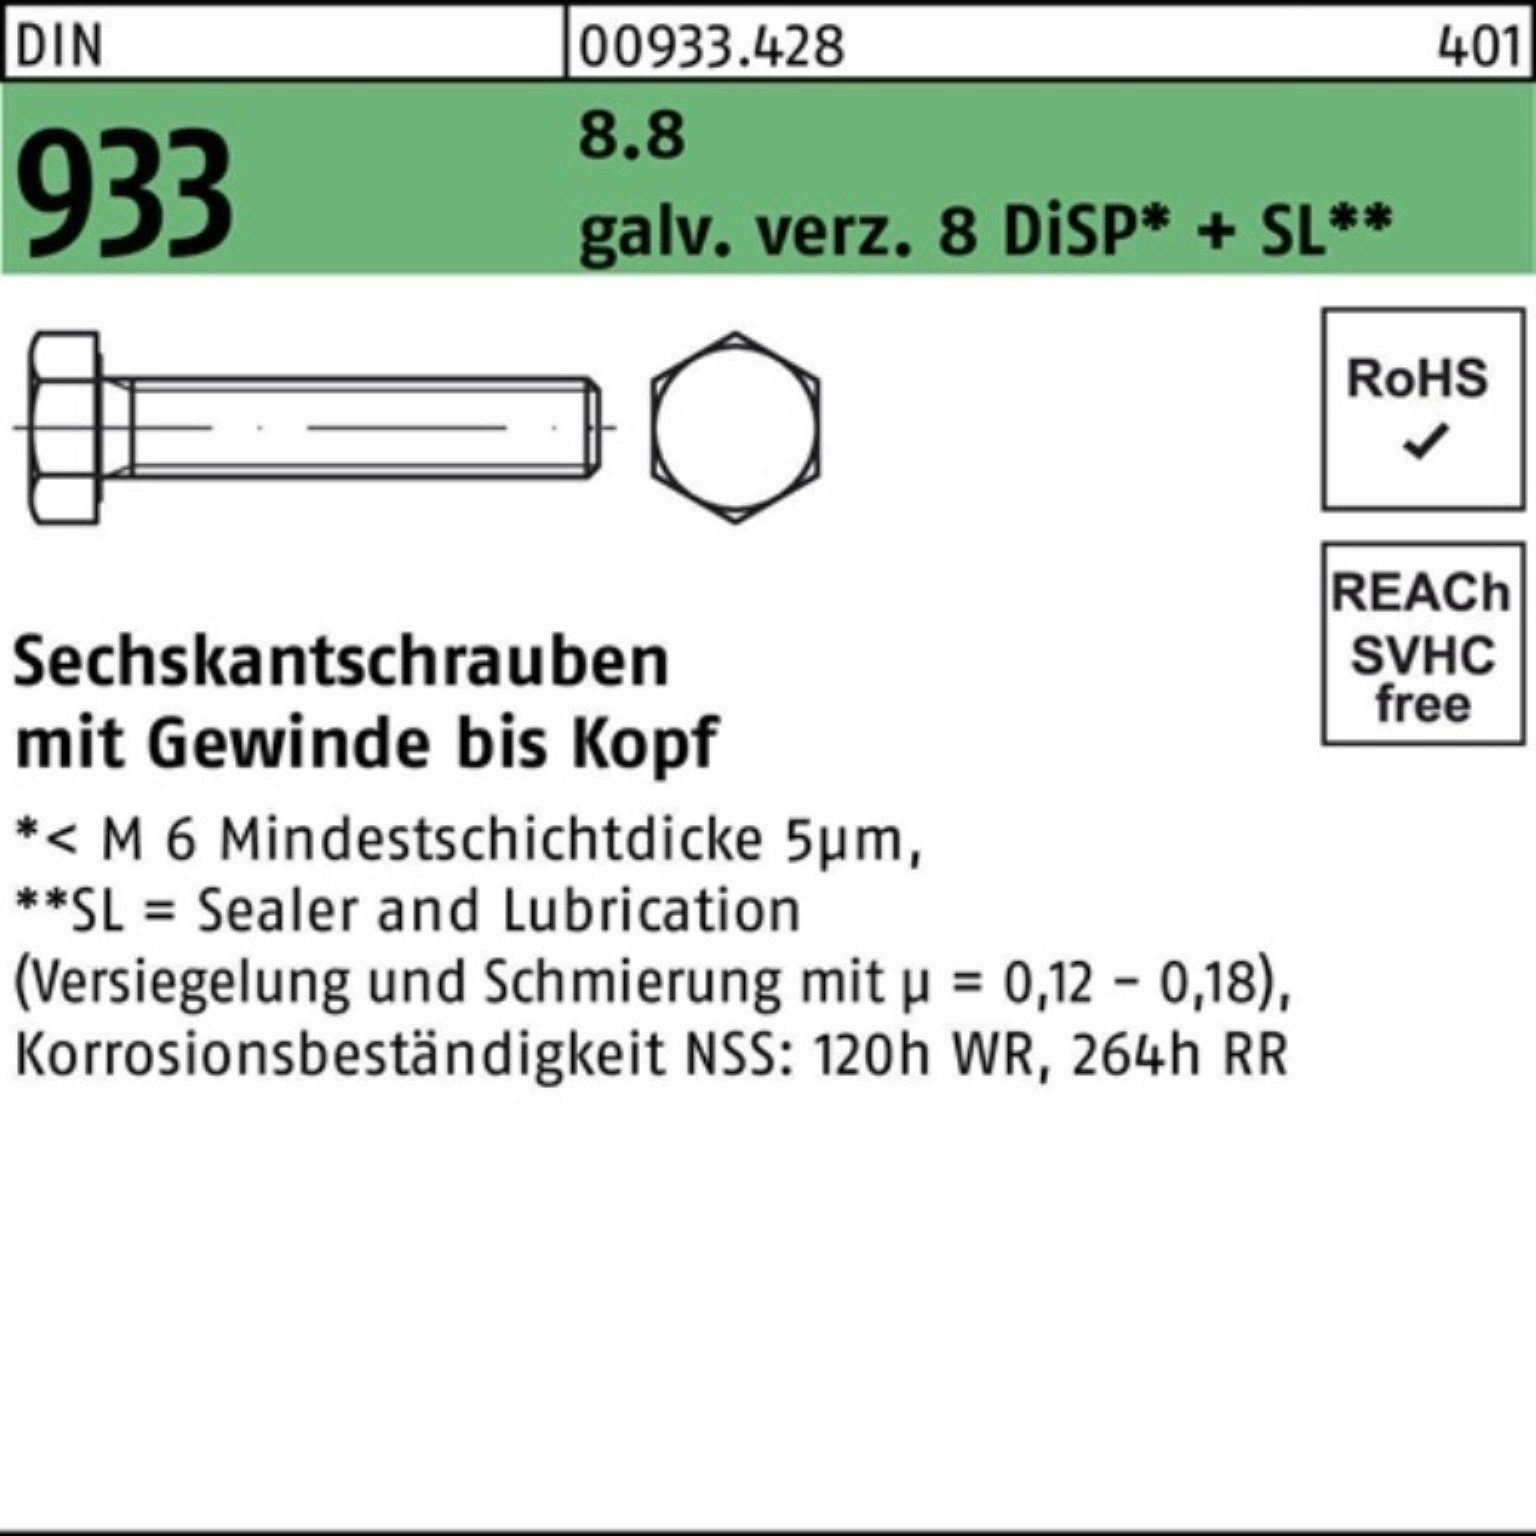 M5x + SL Sechskantschraube 50 Sechskantschraube Reyher gal 20 DIN DiSP 8.8 VG Zn 500er 933 Pack